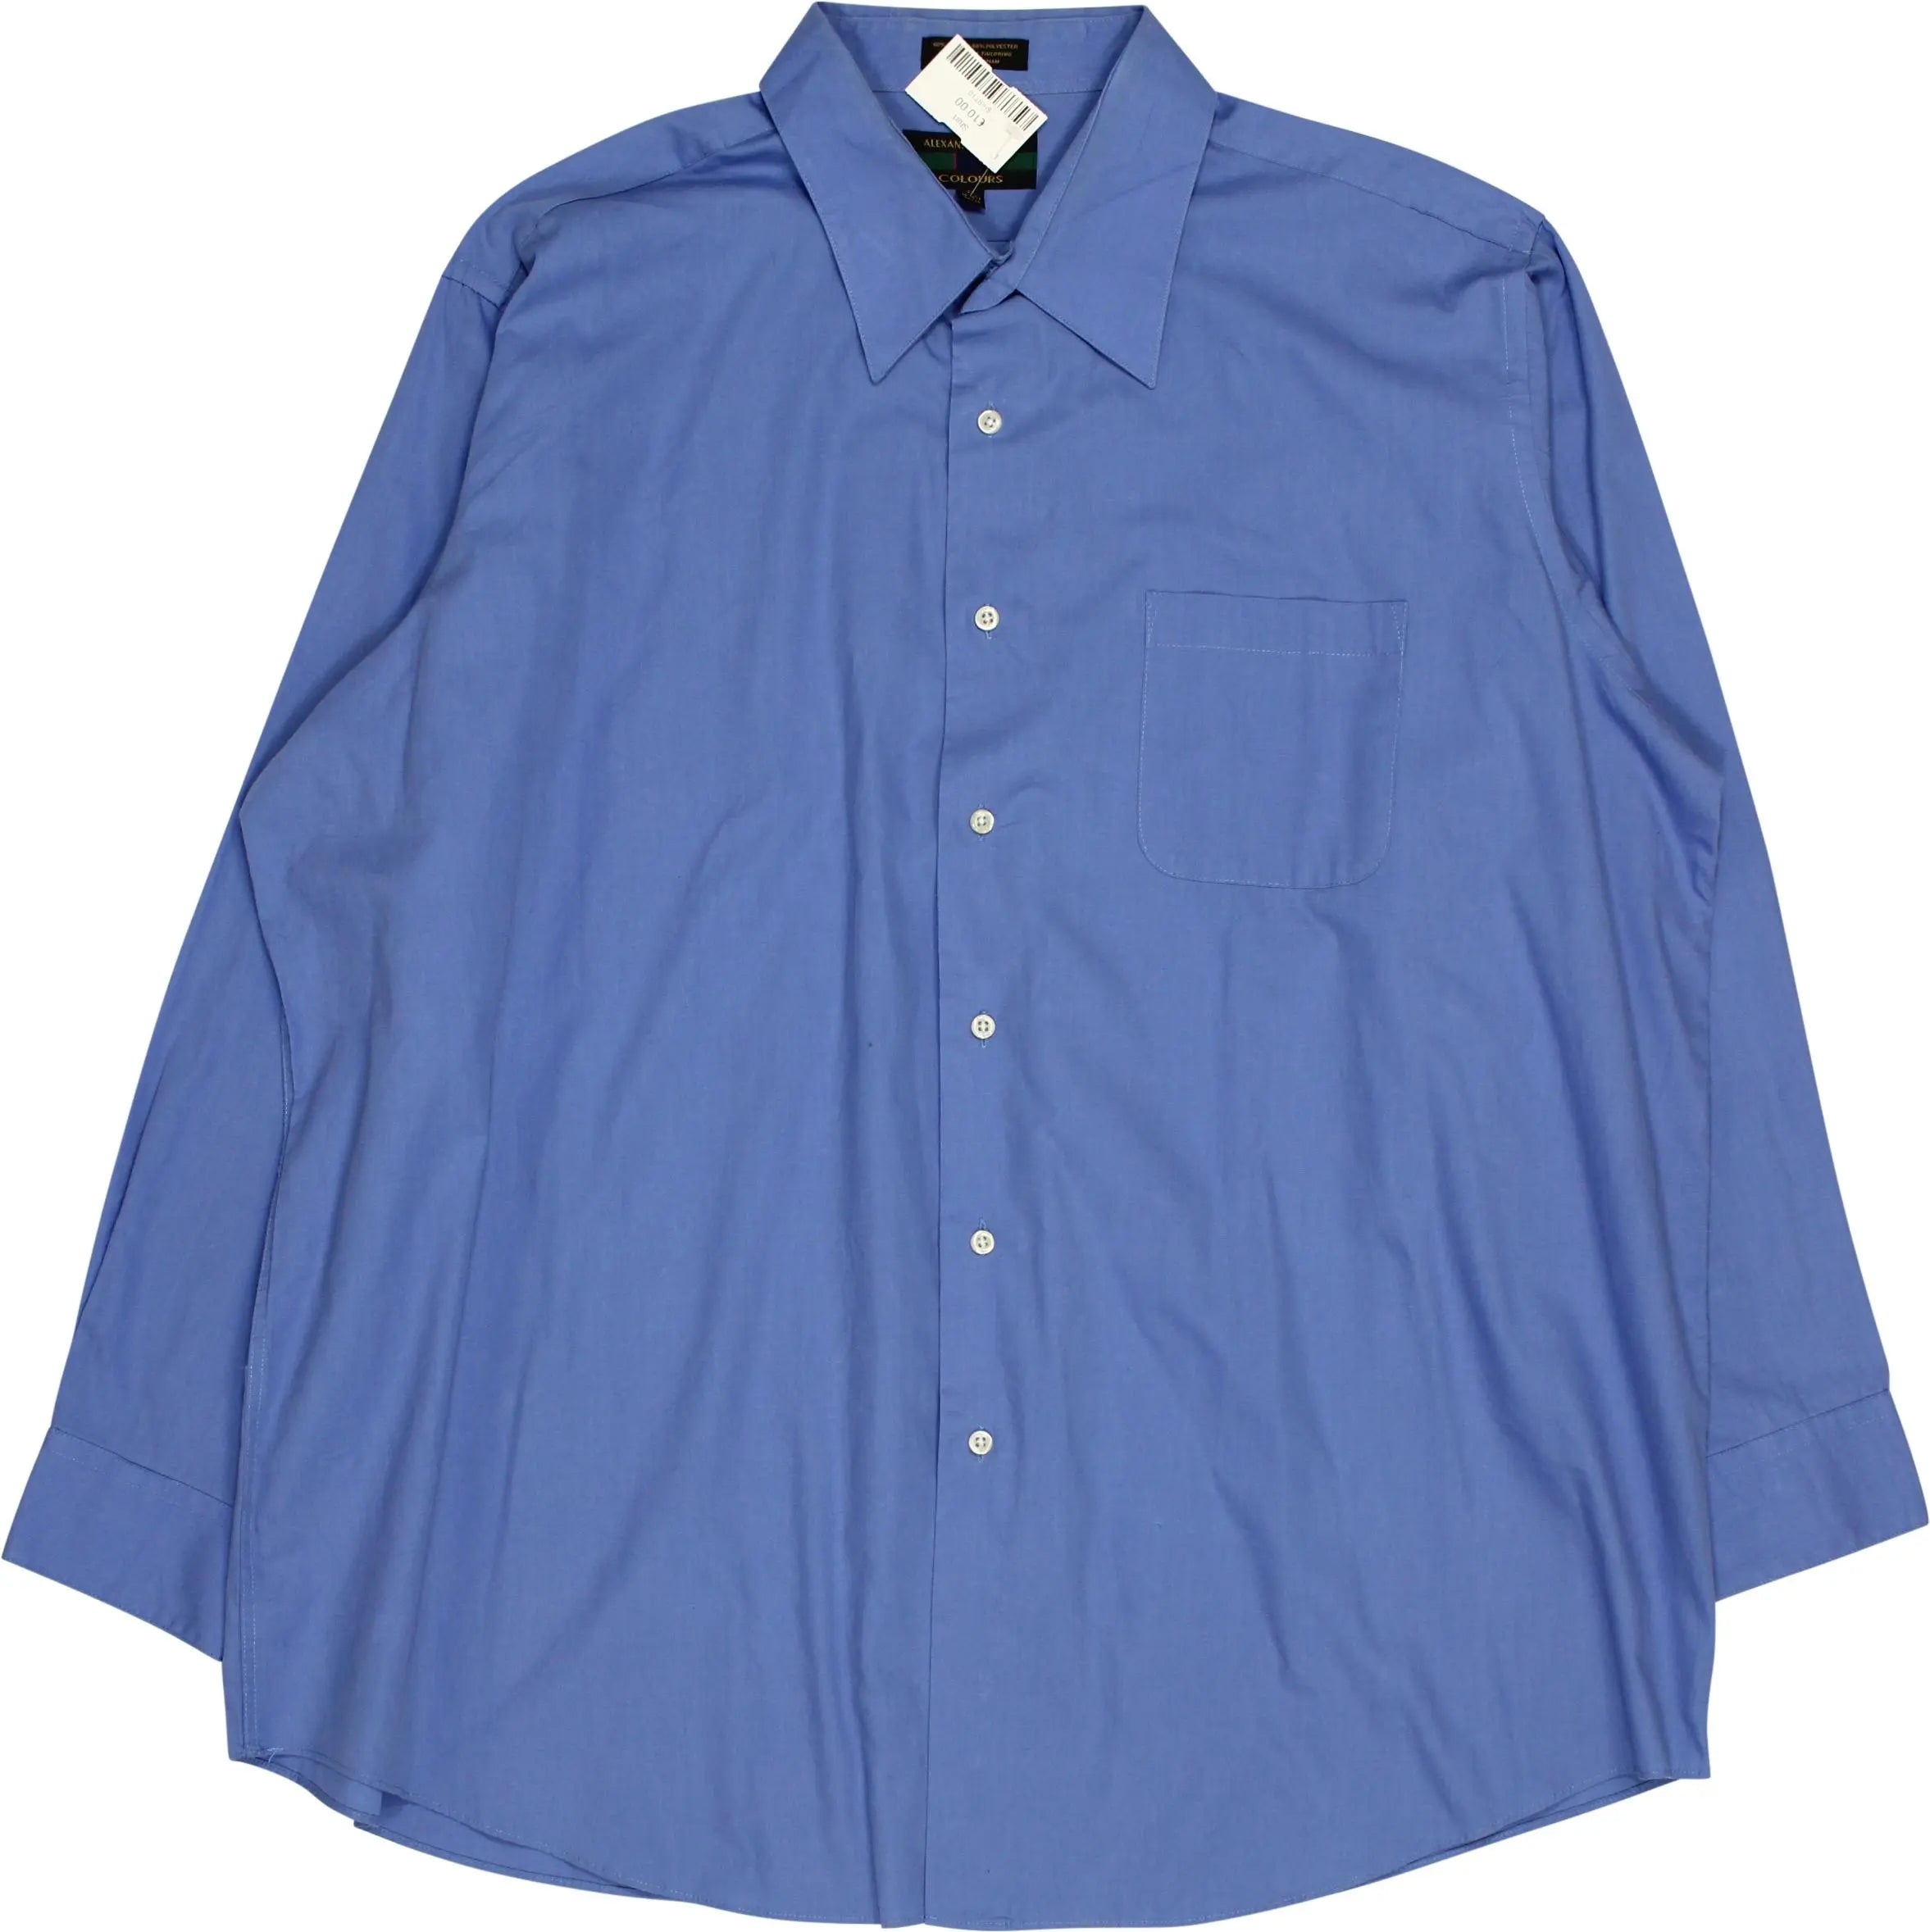 Alexander Julian - Blue shirt- ThriftTale.com - Vintage and second handclothing